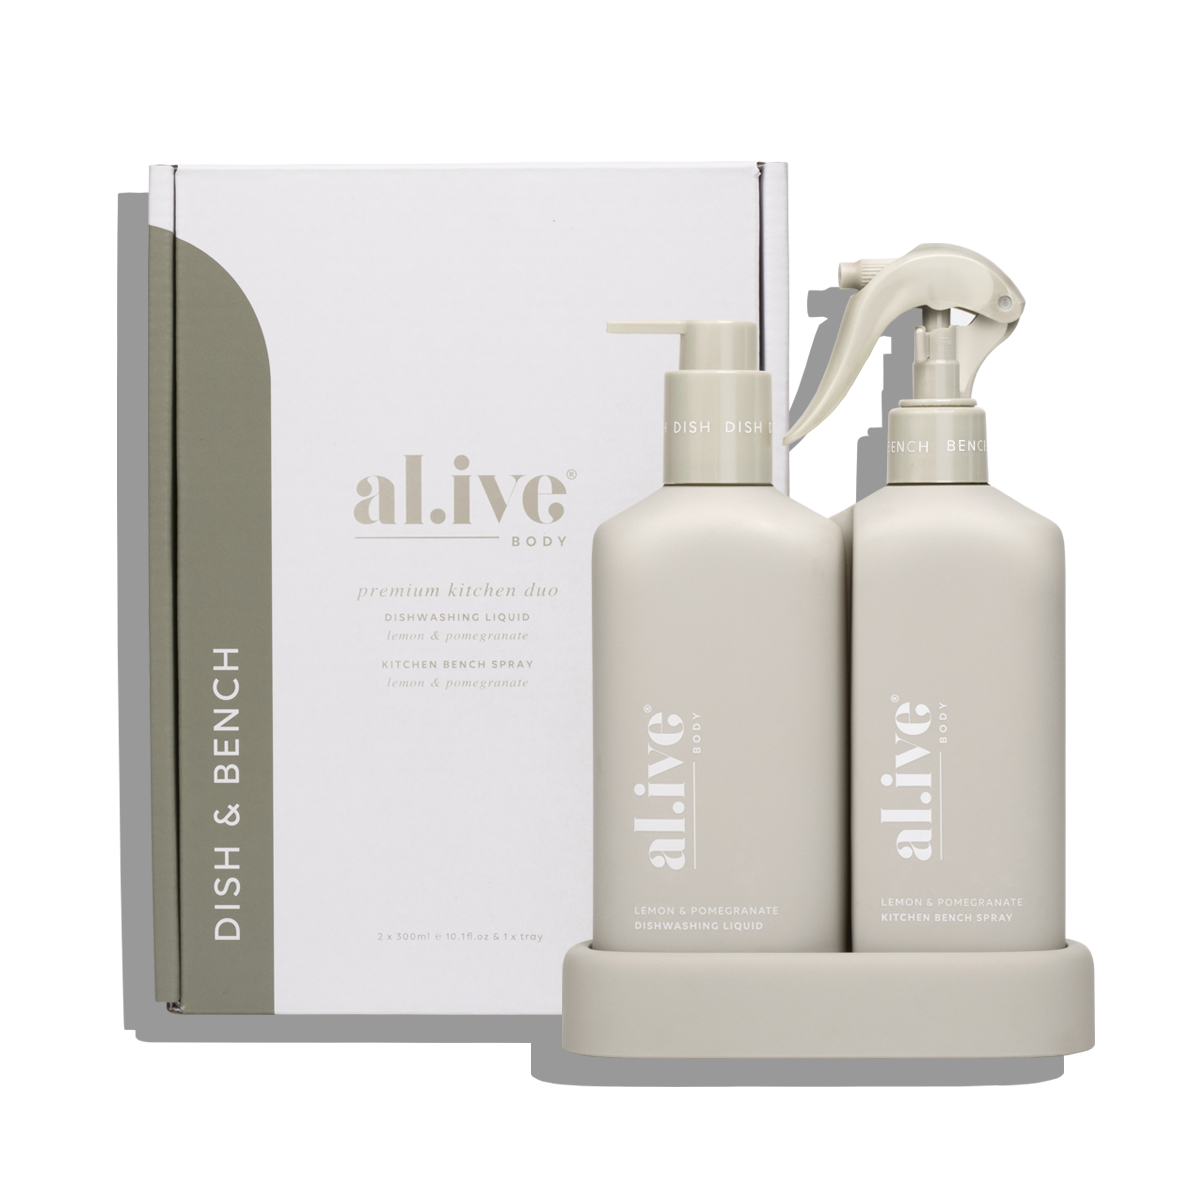 Alive Bench Spray & Dishwashing Liquid Duo 2 x 300ml